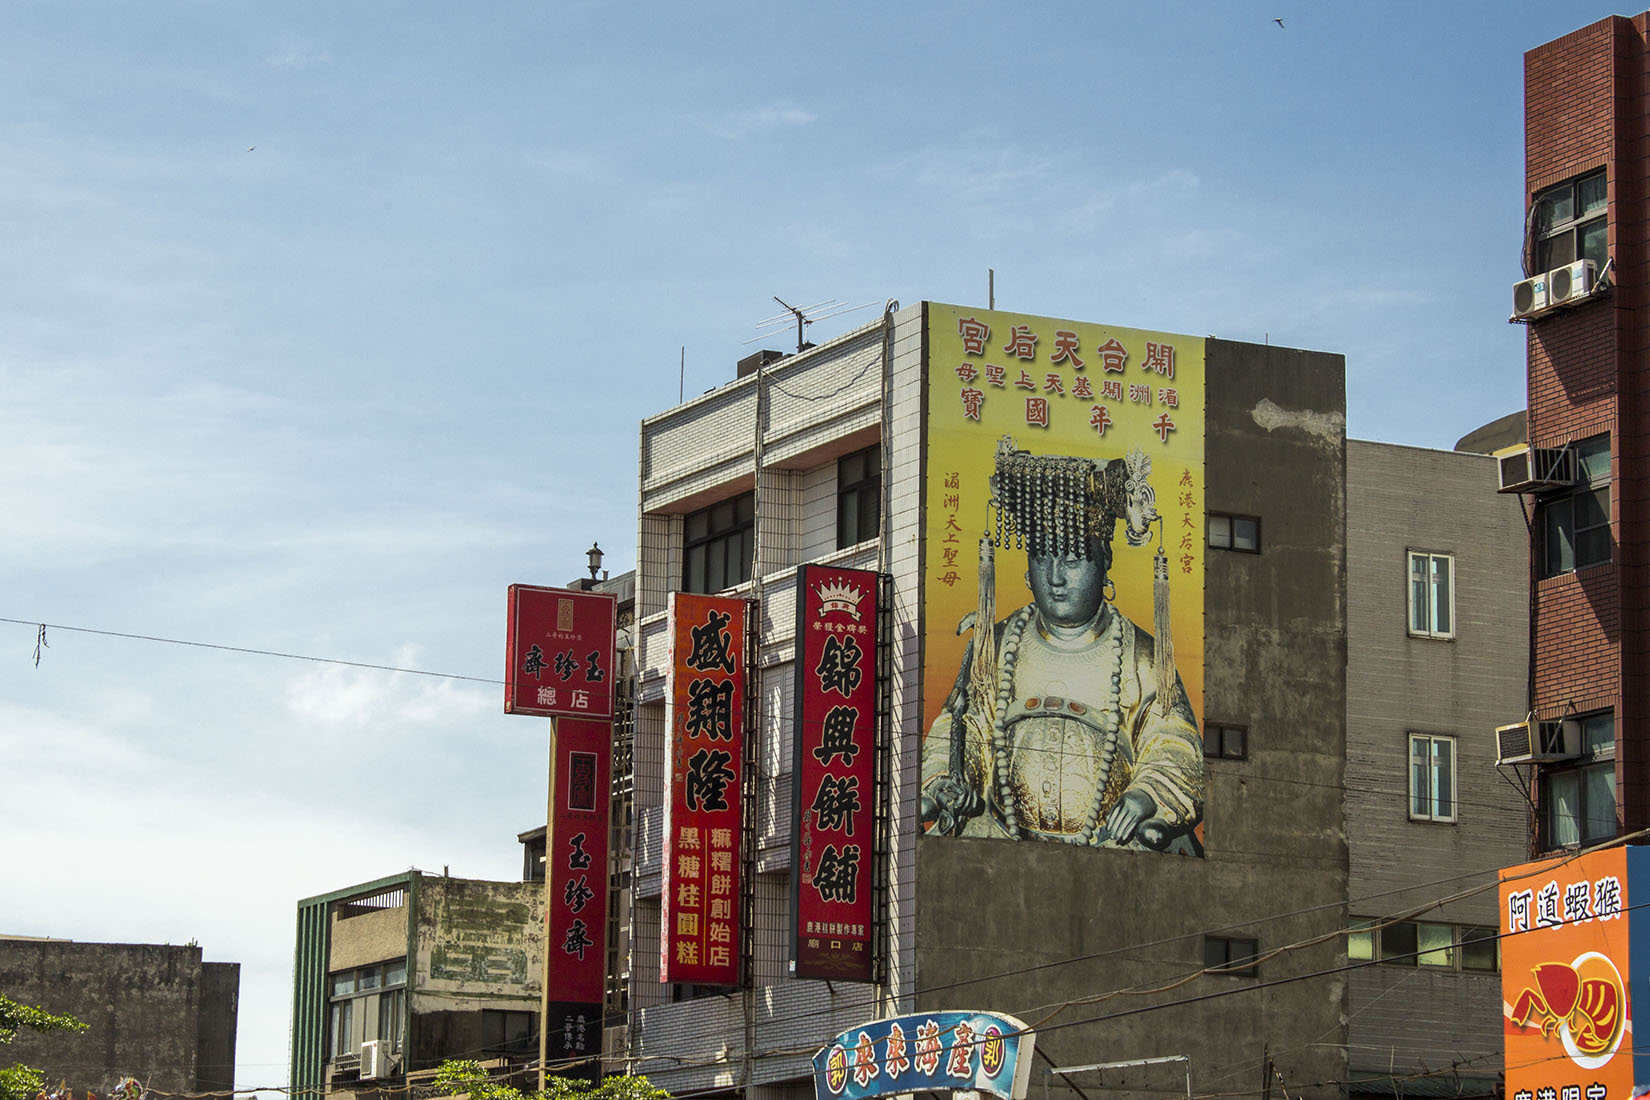 Taichung, voyage, architecture, publicité, sinogrammes